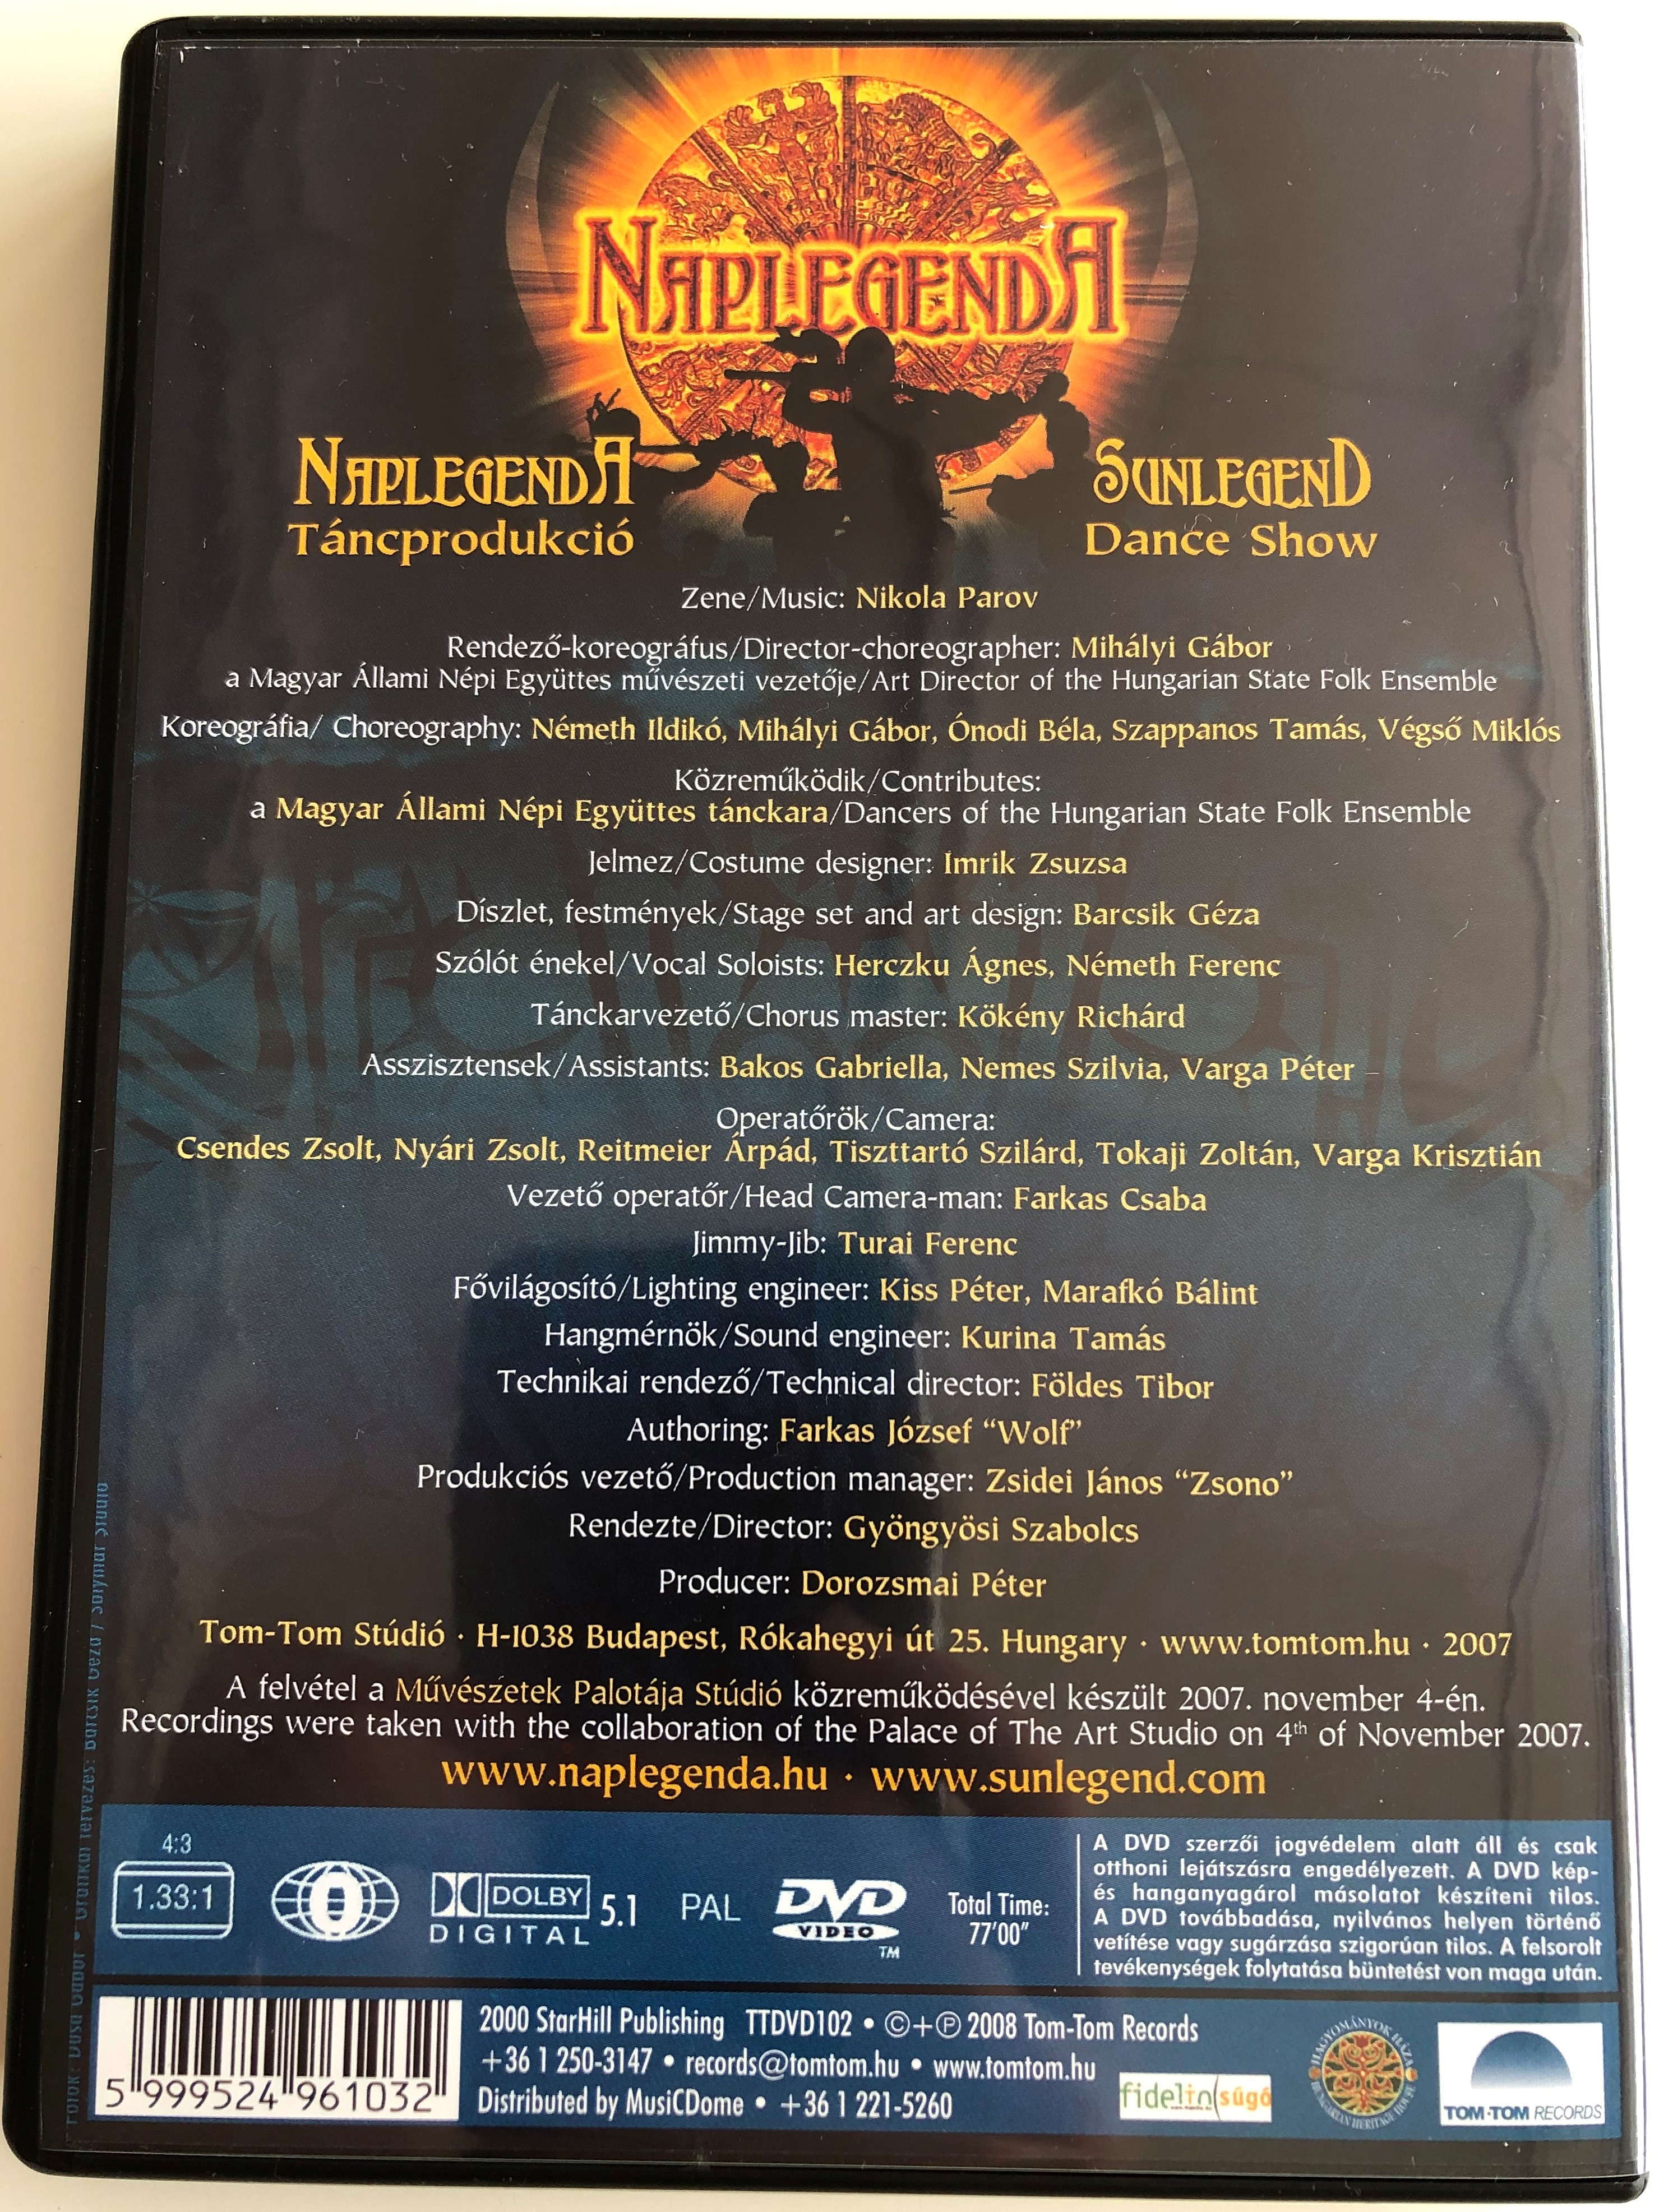 -naplegenda-t-ncprodukci-dvd-2007-sunlegend-dance-show-7.jpg